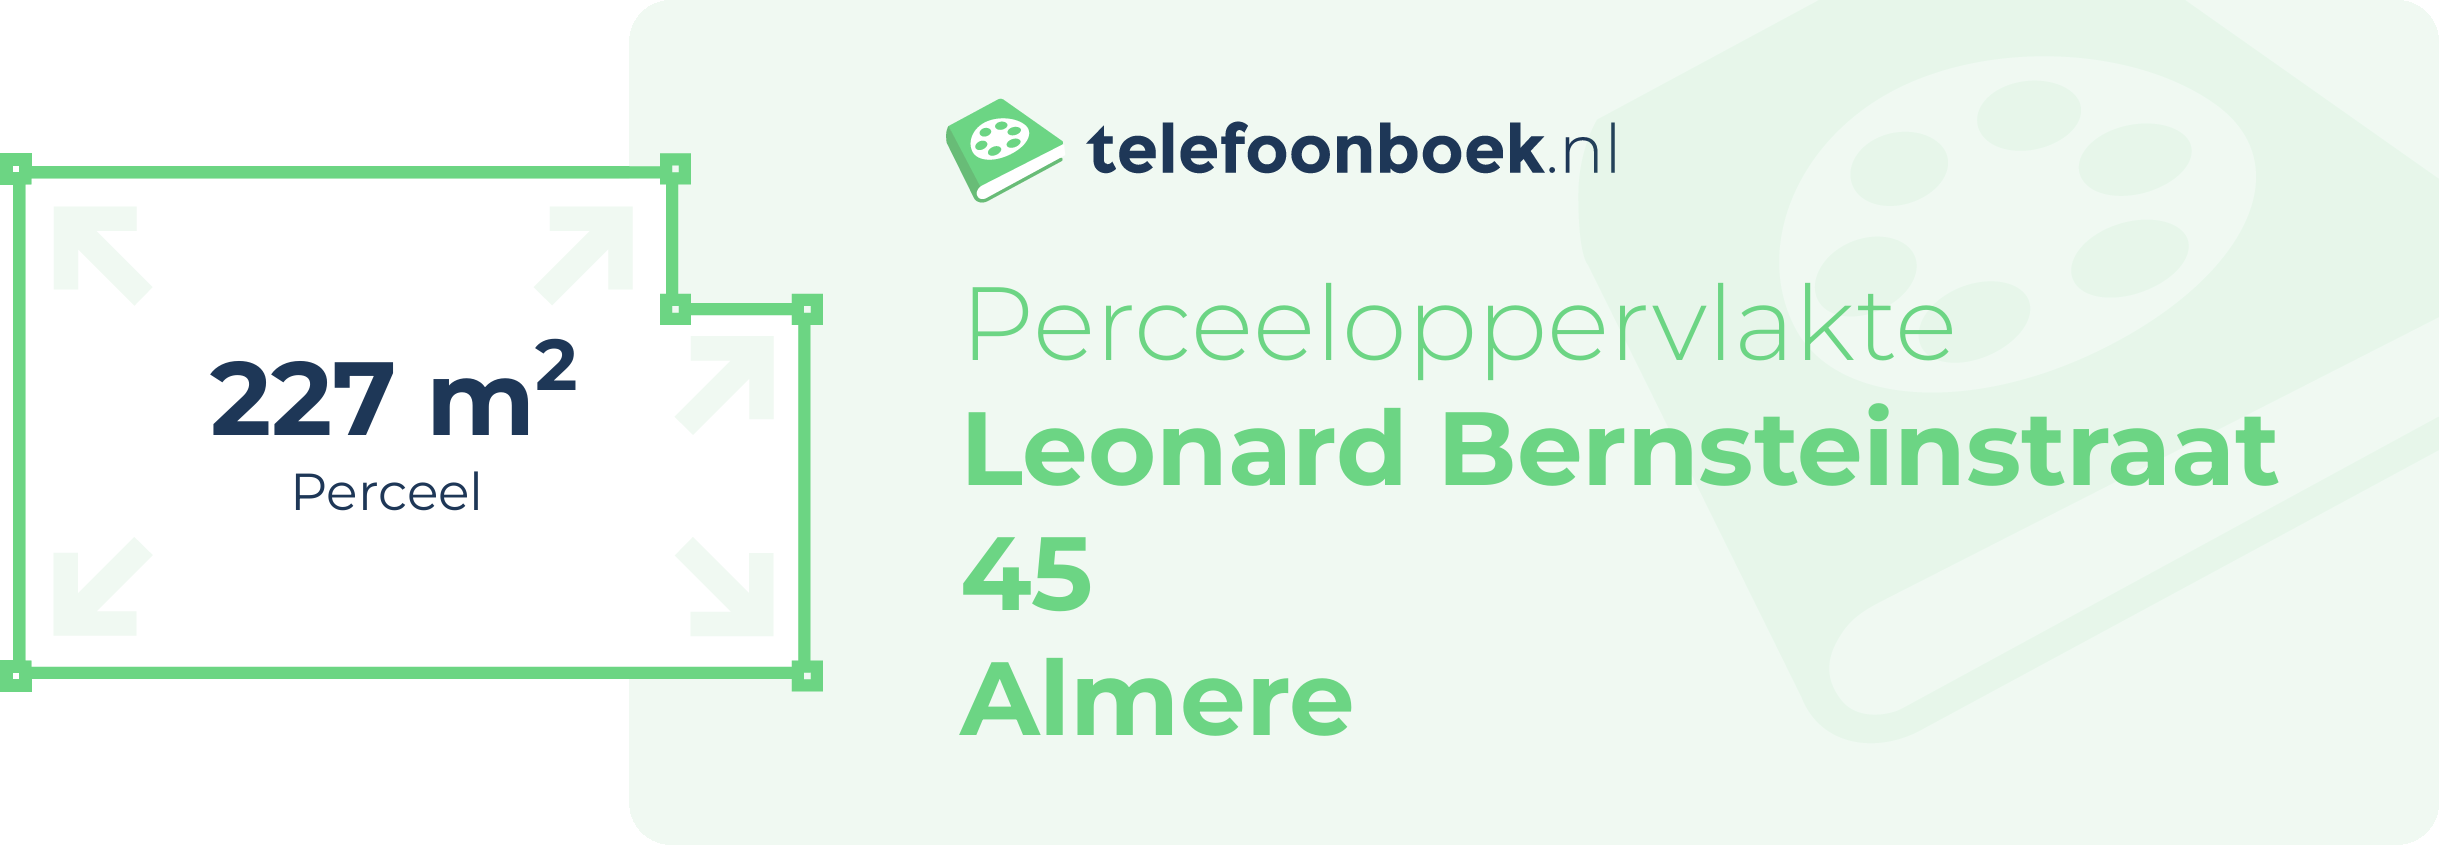 Perceeloppervlakte Leonard Bernsteinstraat 45 Almere